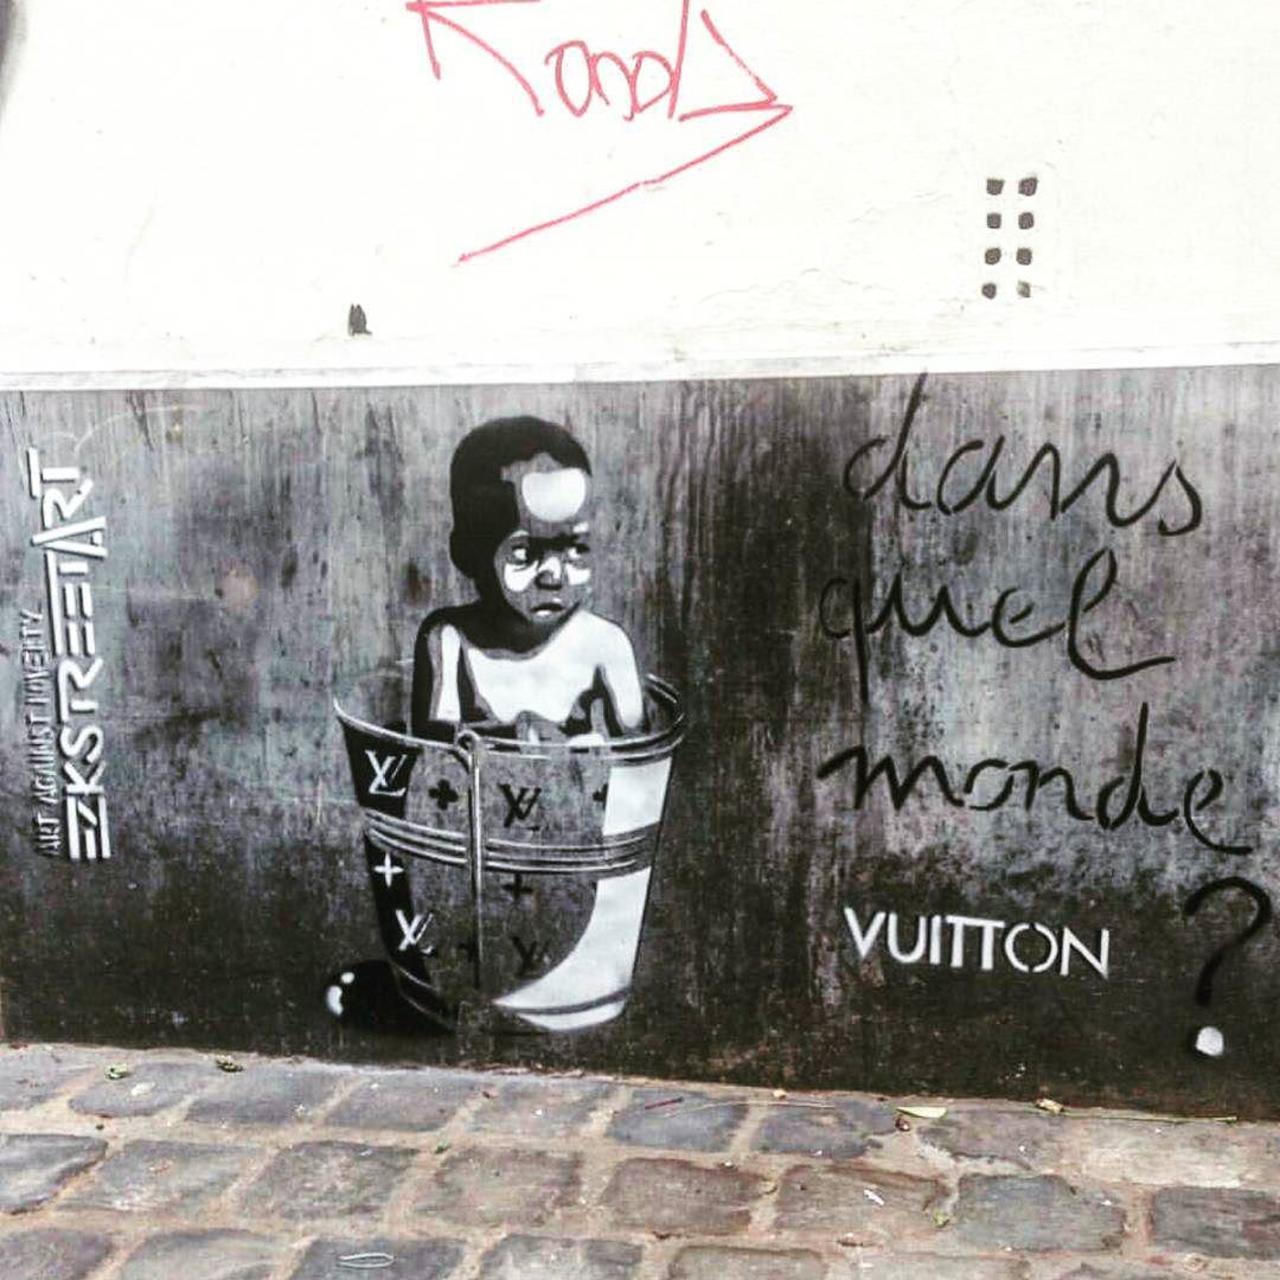 #Paris #graffiti photo by @beabookingstories http://ift.tt/1Mdjla8 #StreetArt http://t.co/eEviwr7YgM